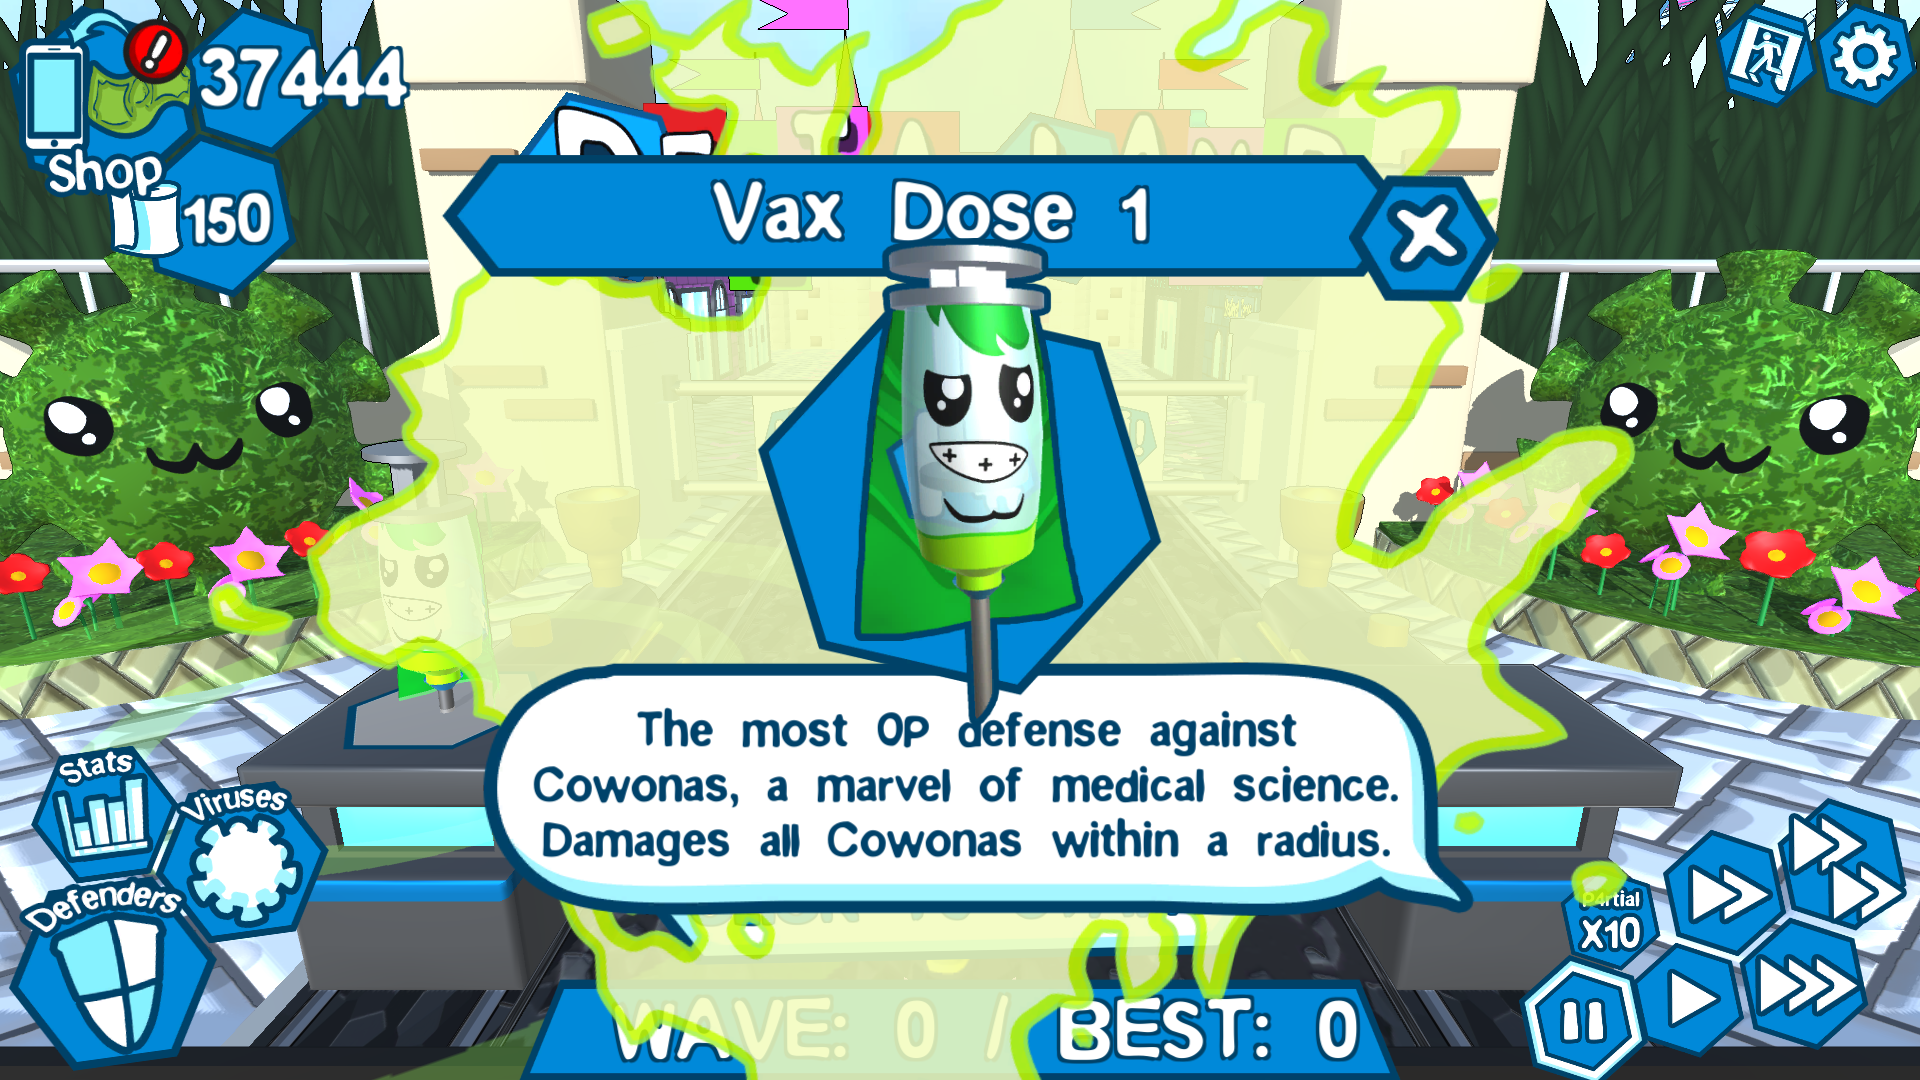 Antivaxxers abominate this game